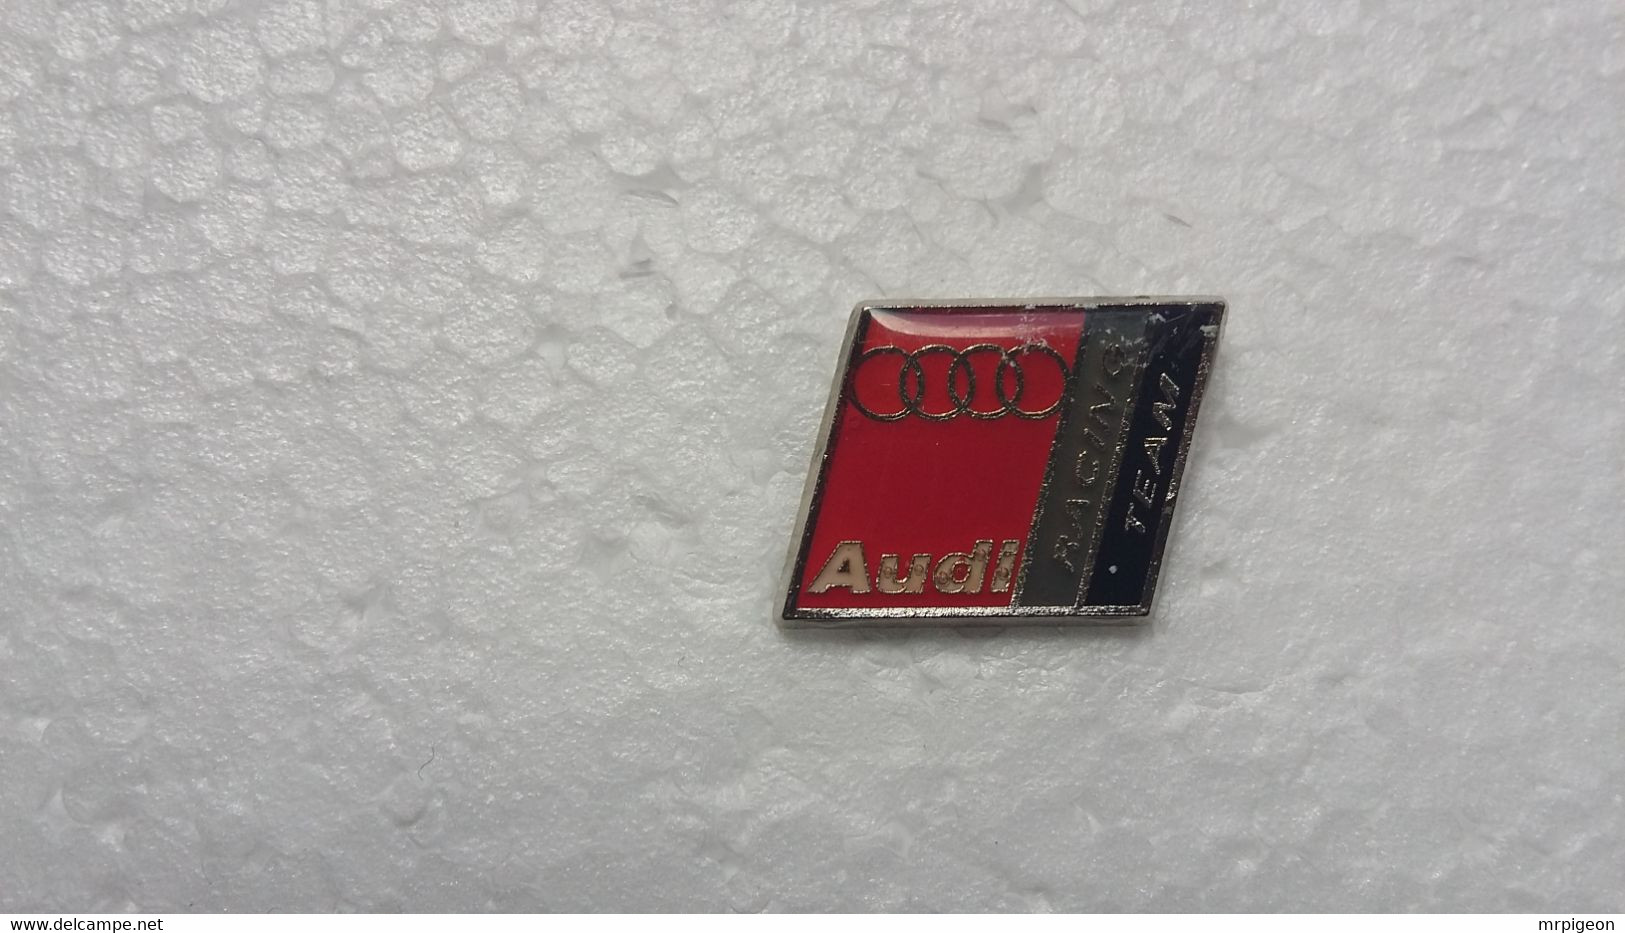 AUDI RACING TEAM - Audi